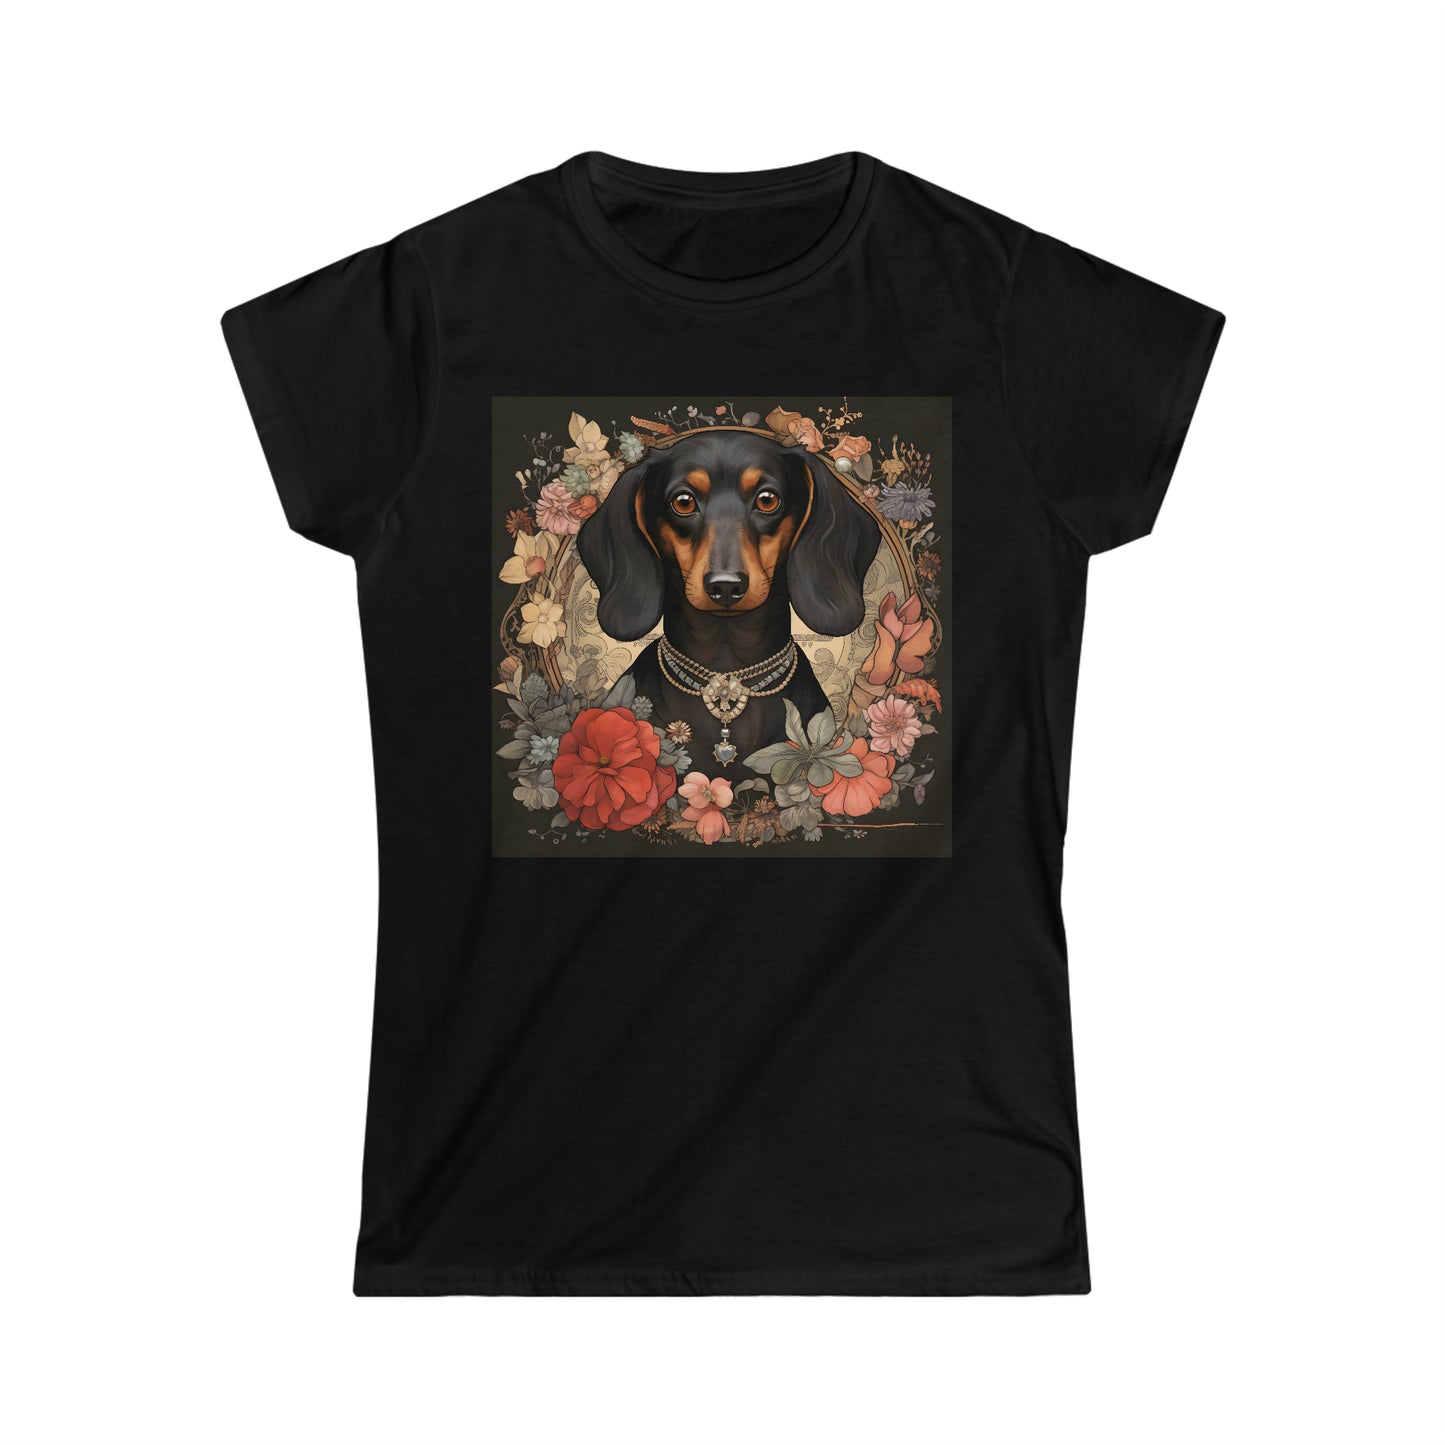 Dachshund Softstyle T-Shirt: "Heirloom"